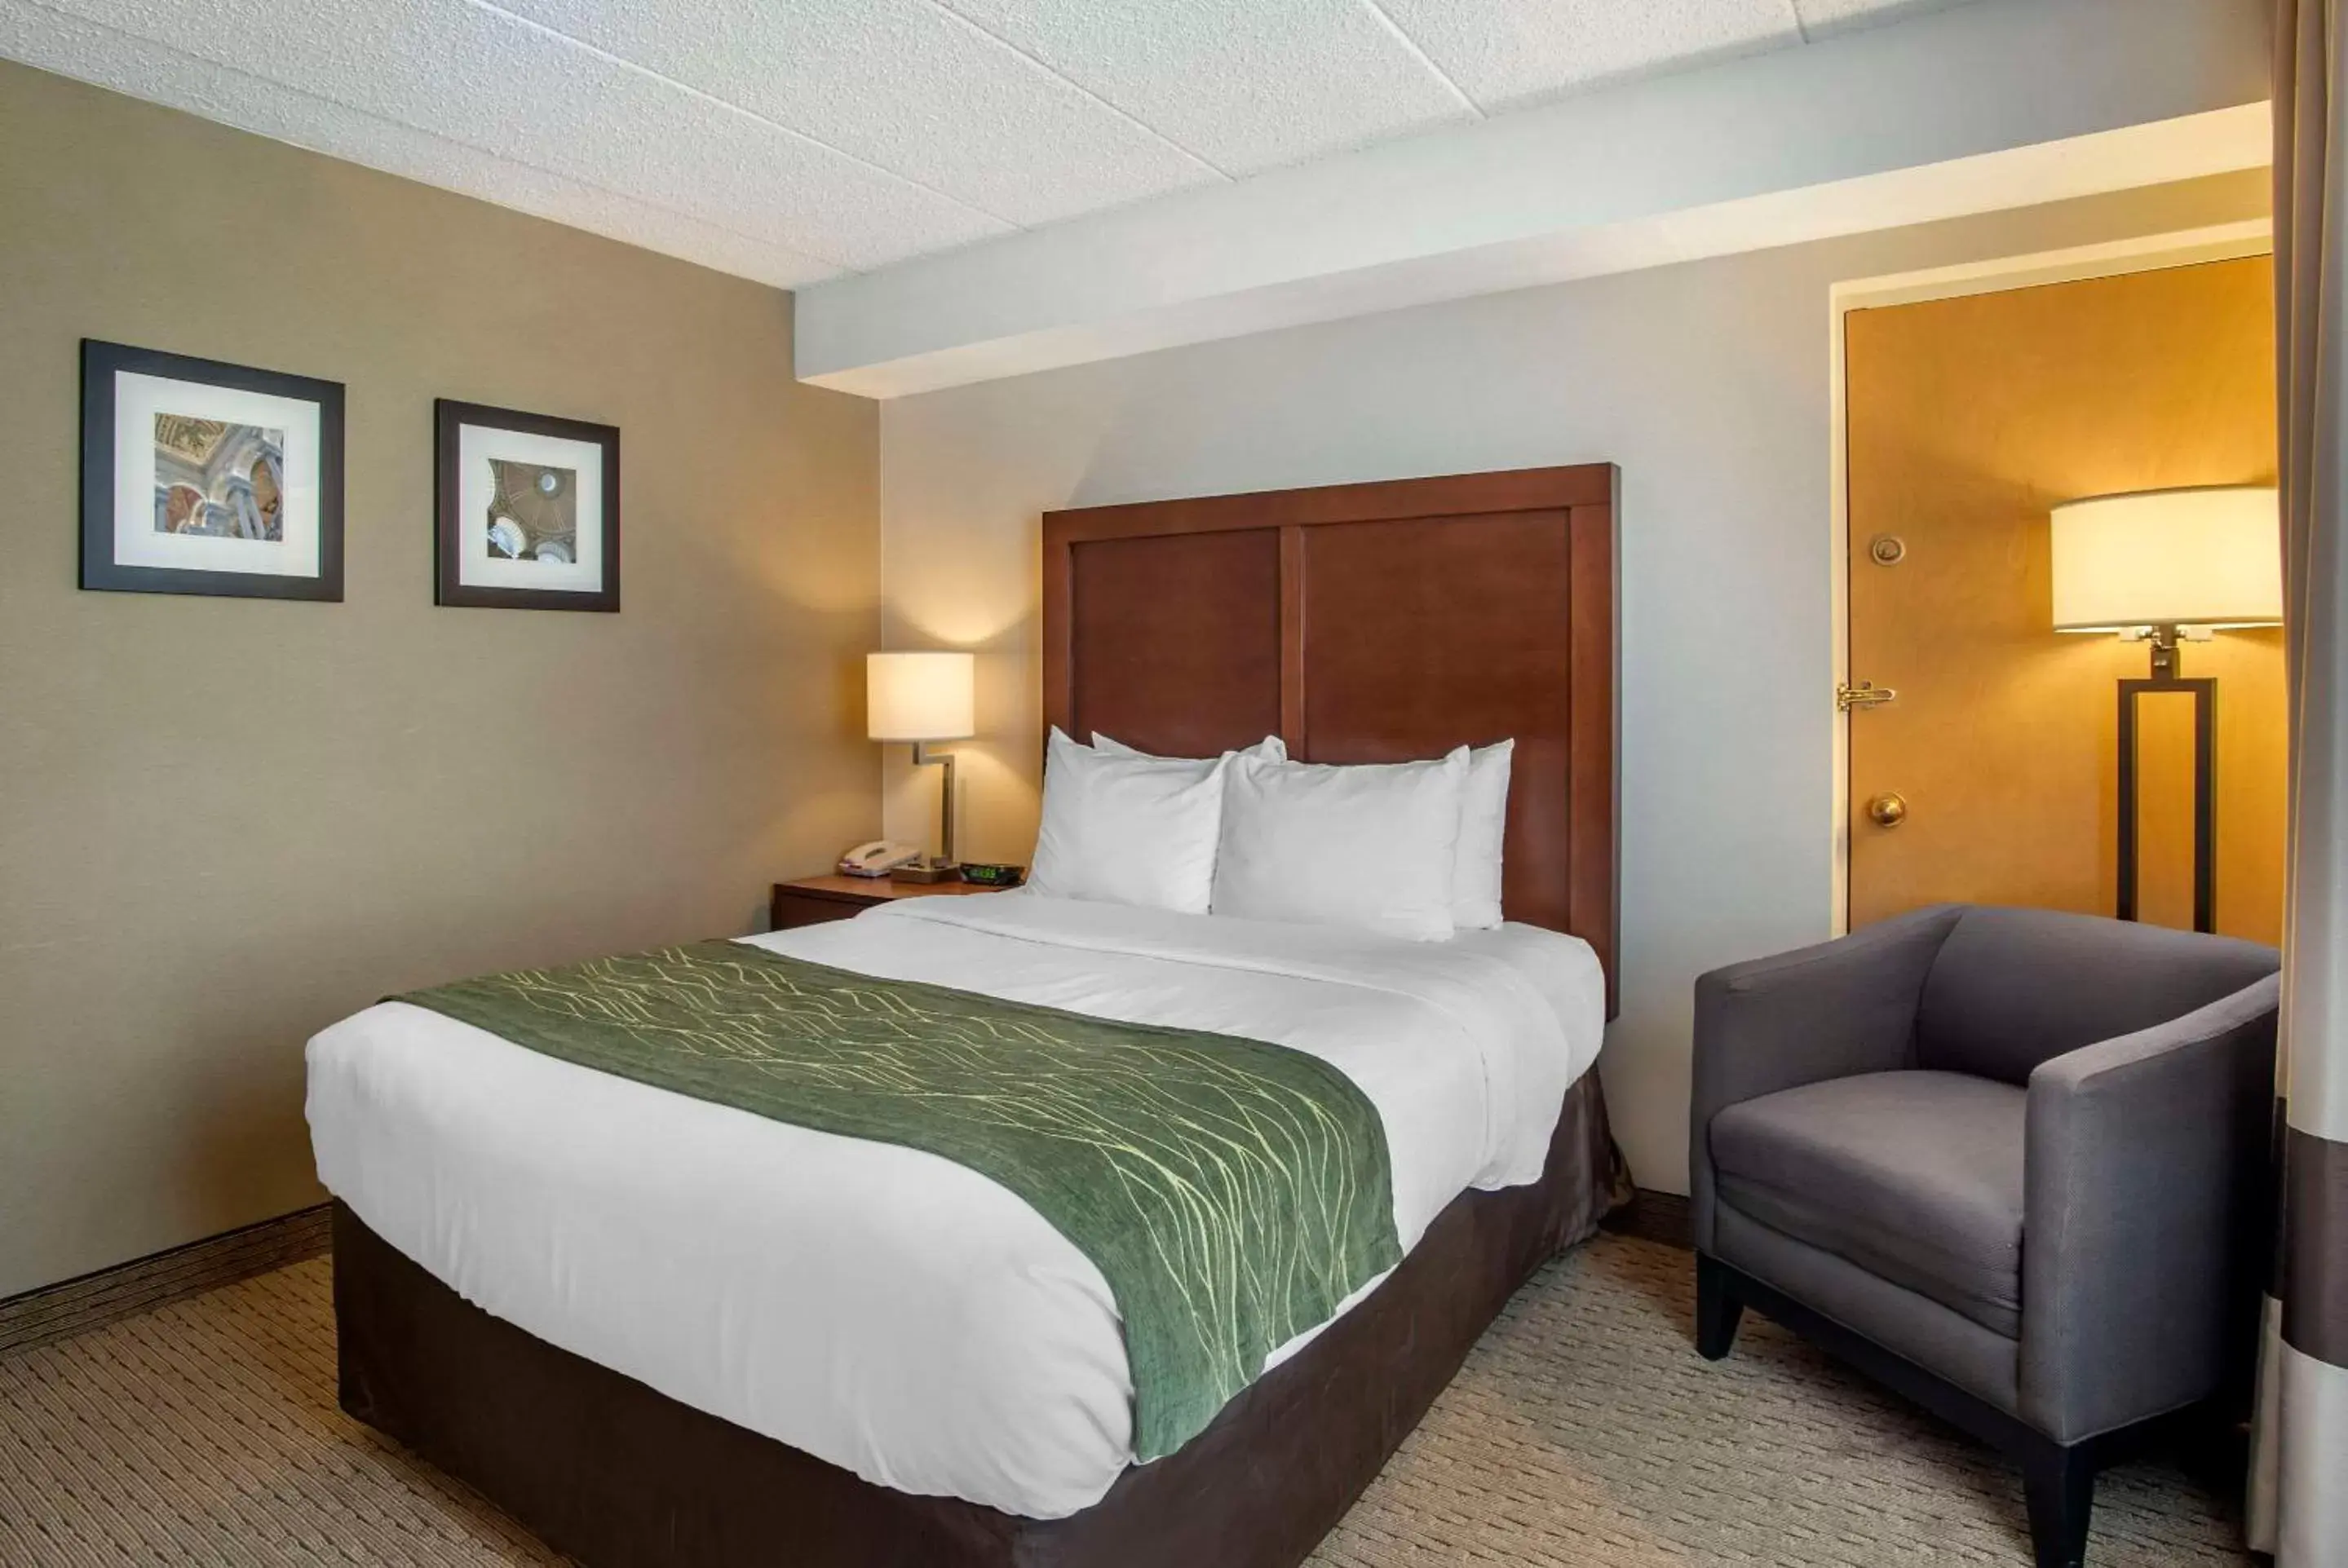 Bedroom, Bed in Comfort Inn Shady Grove - Gaithersburg - Rockville